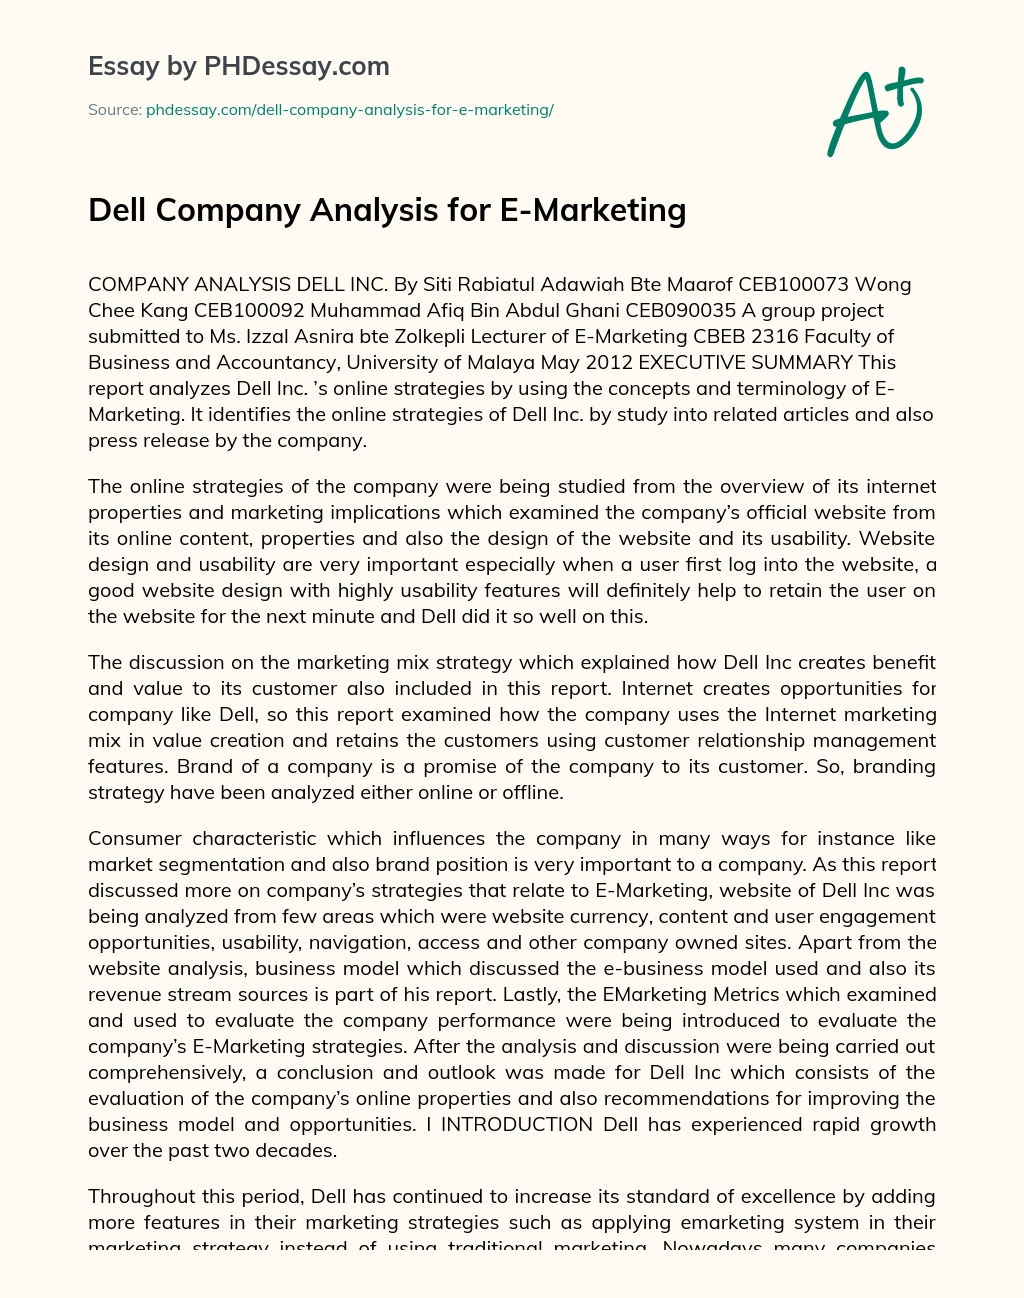 Dell Company Analysis for E-Marketing essay